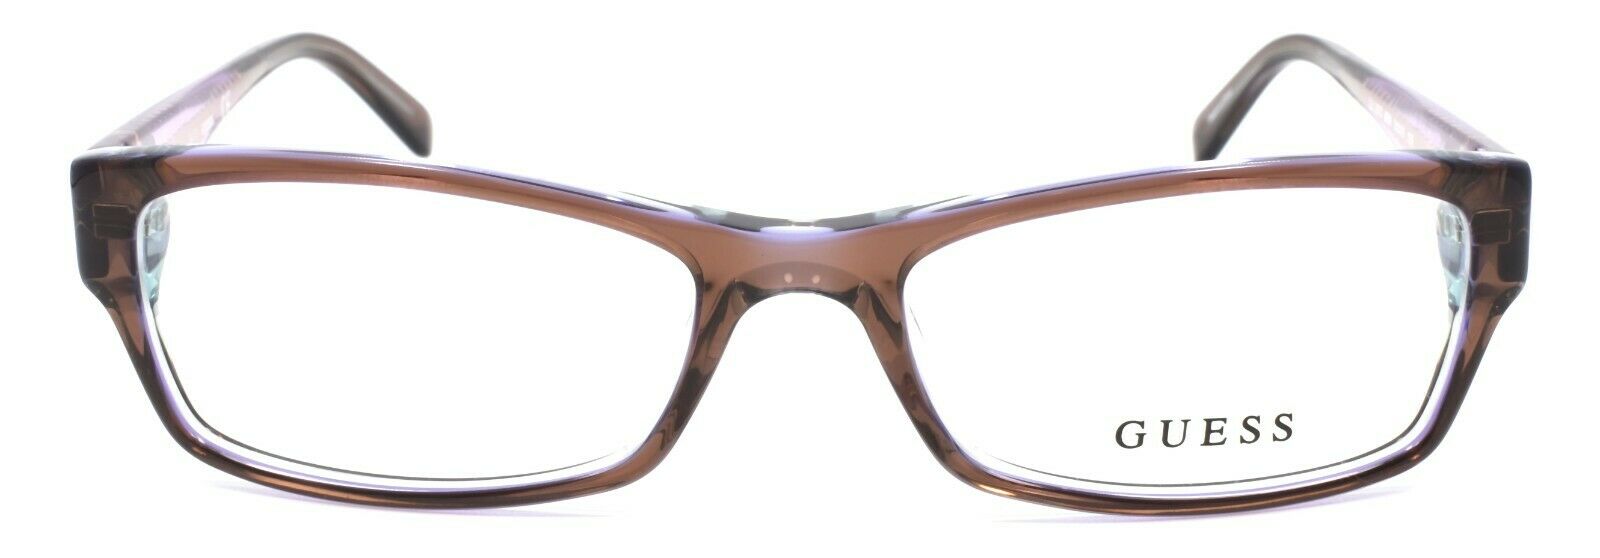 2-GUESS GU2373 BRN Women's Eyeglasses Frames 51-16-135 Brown-715583723672-IKSpecs